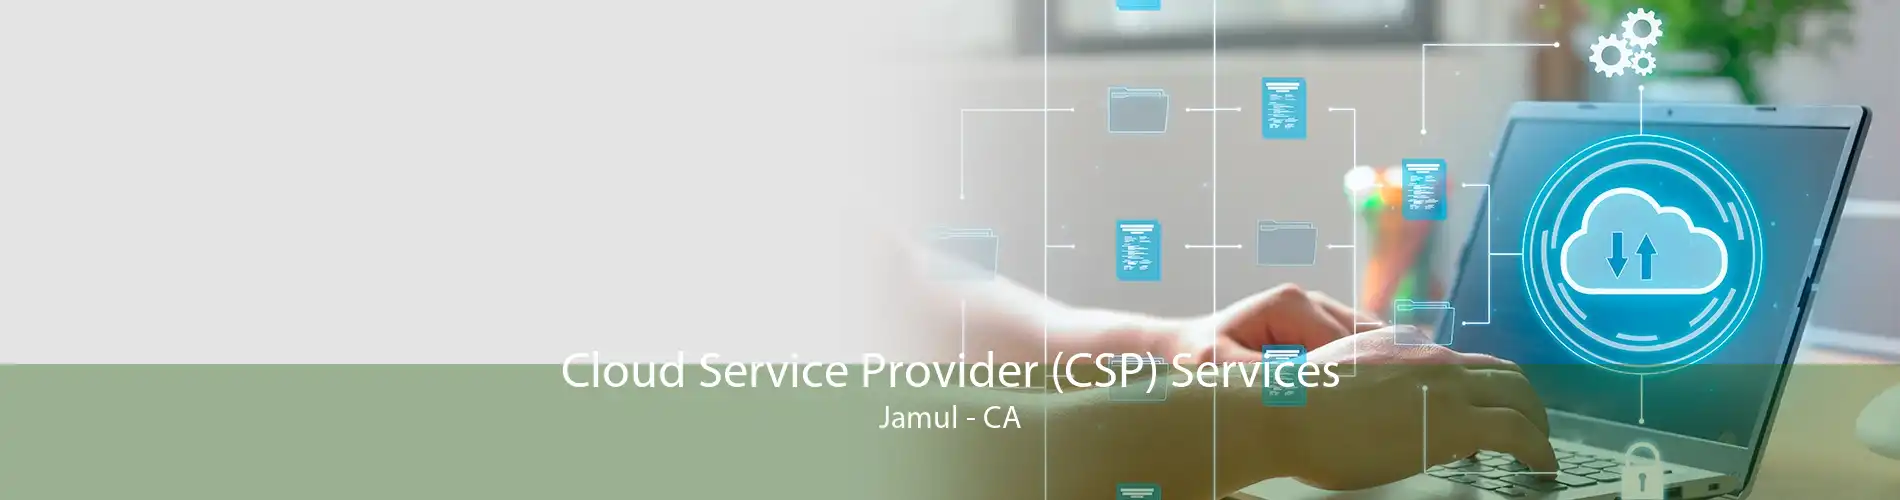 Cloud Service Provider (CSP) Services Jamul - CA